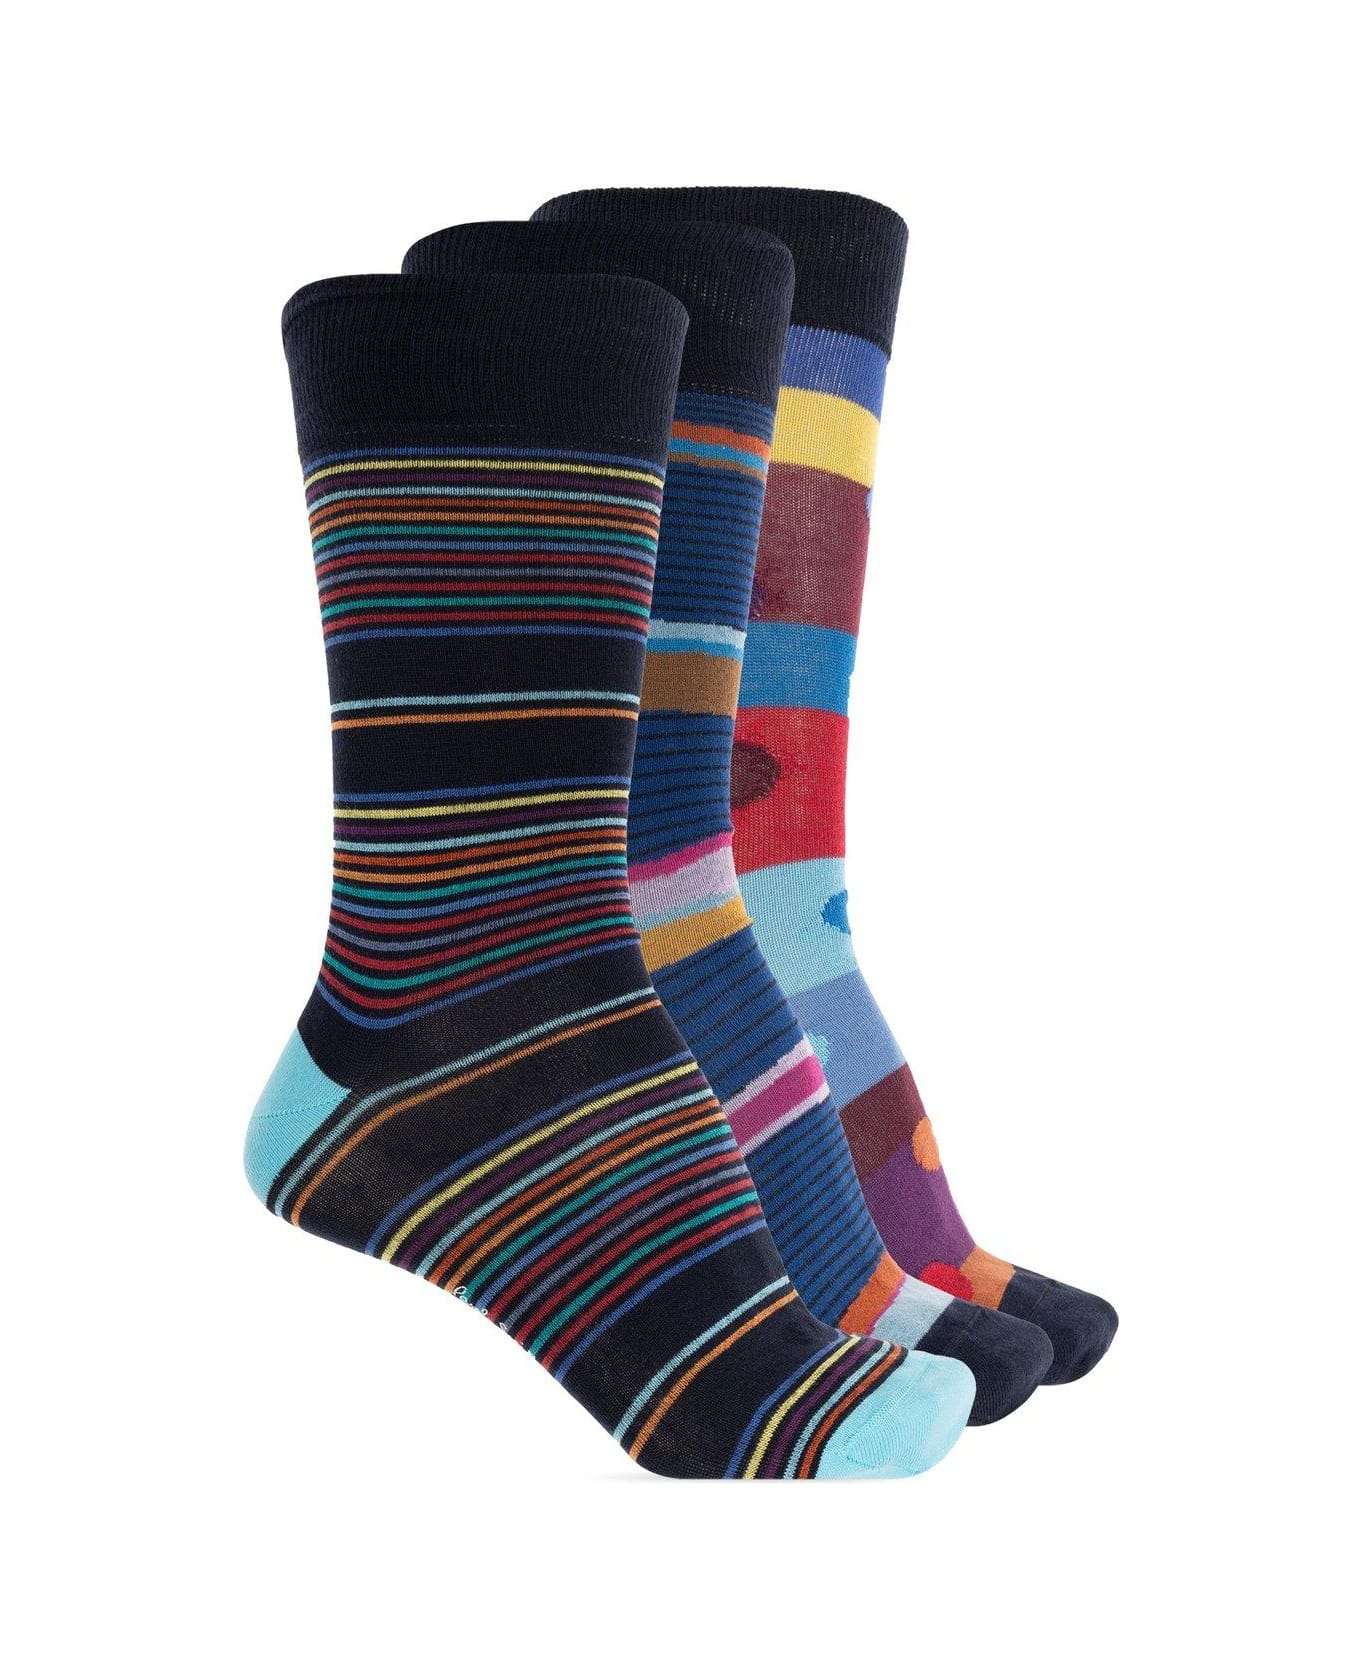 Paul Smith Socks Three Pack - MultiColour 靴下